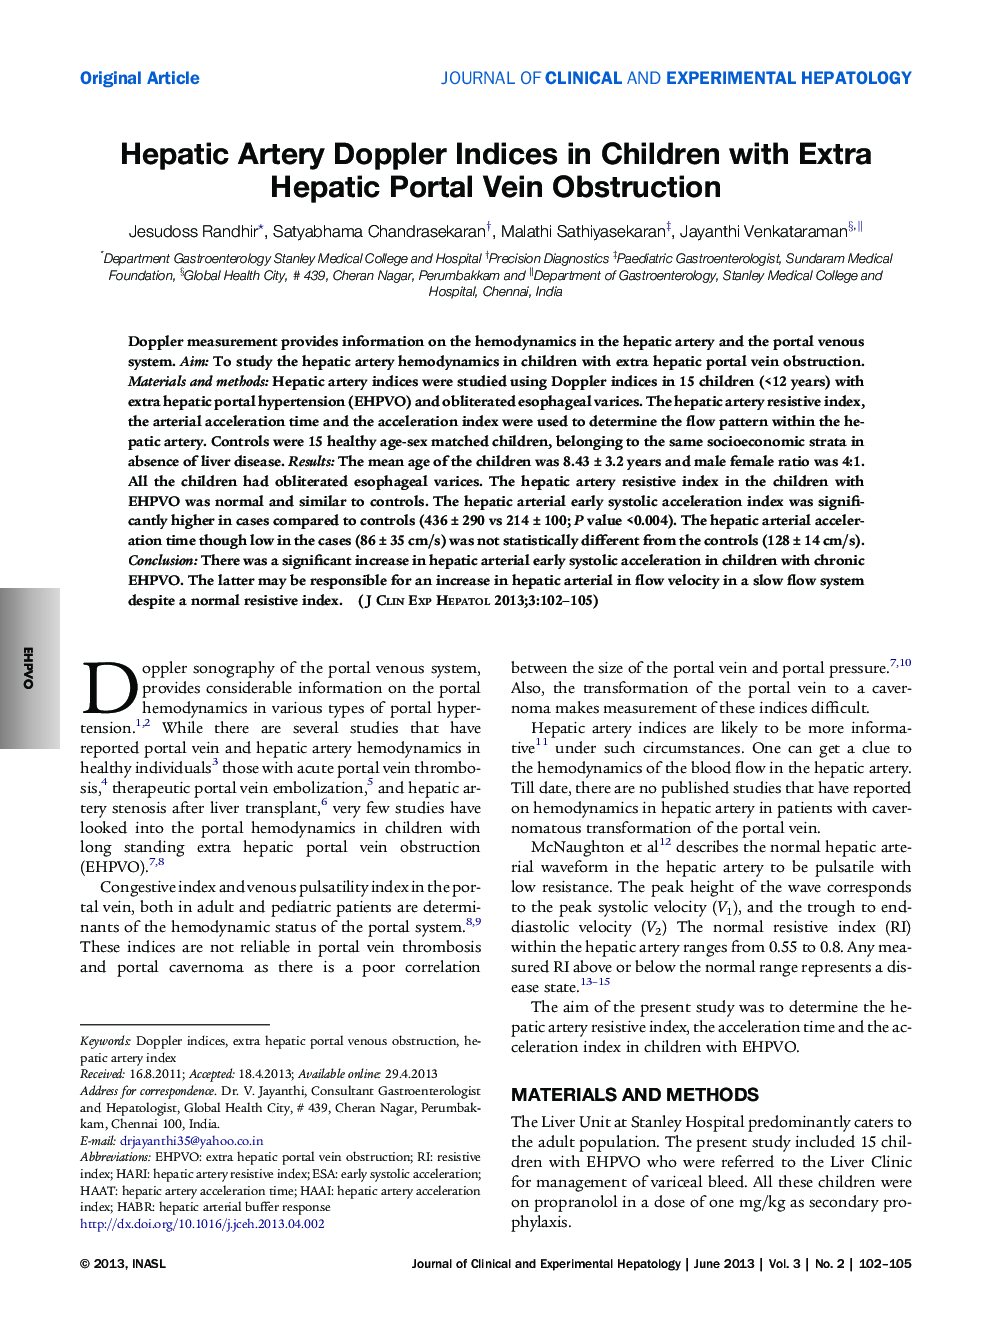 Hepatic Artery Doppler Indices in Children with Extra Hepatic Portal Vein Obstruction